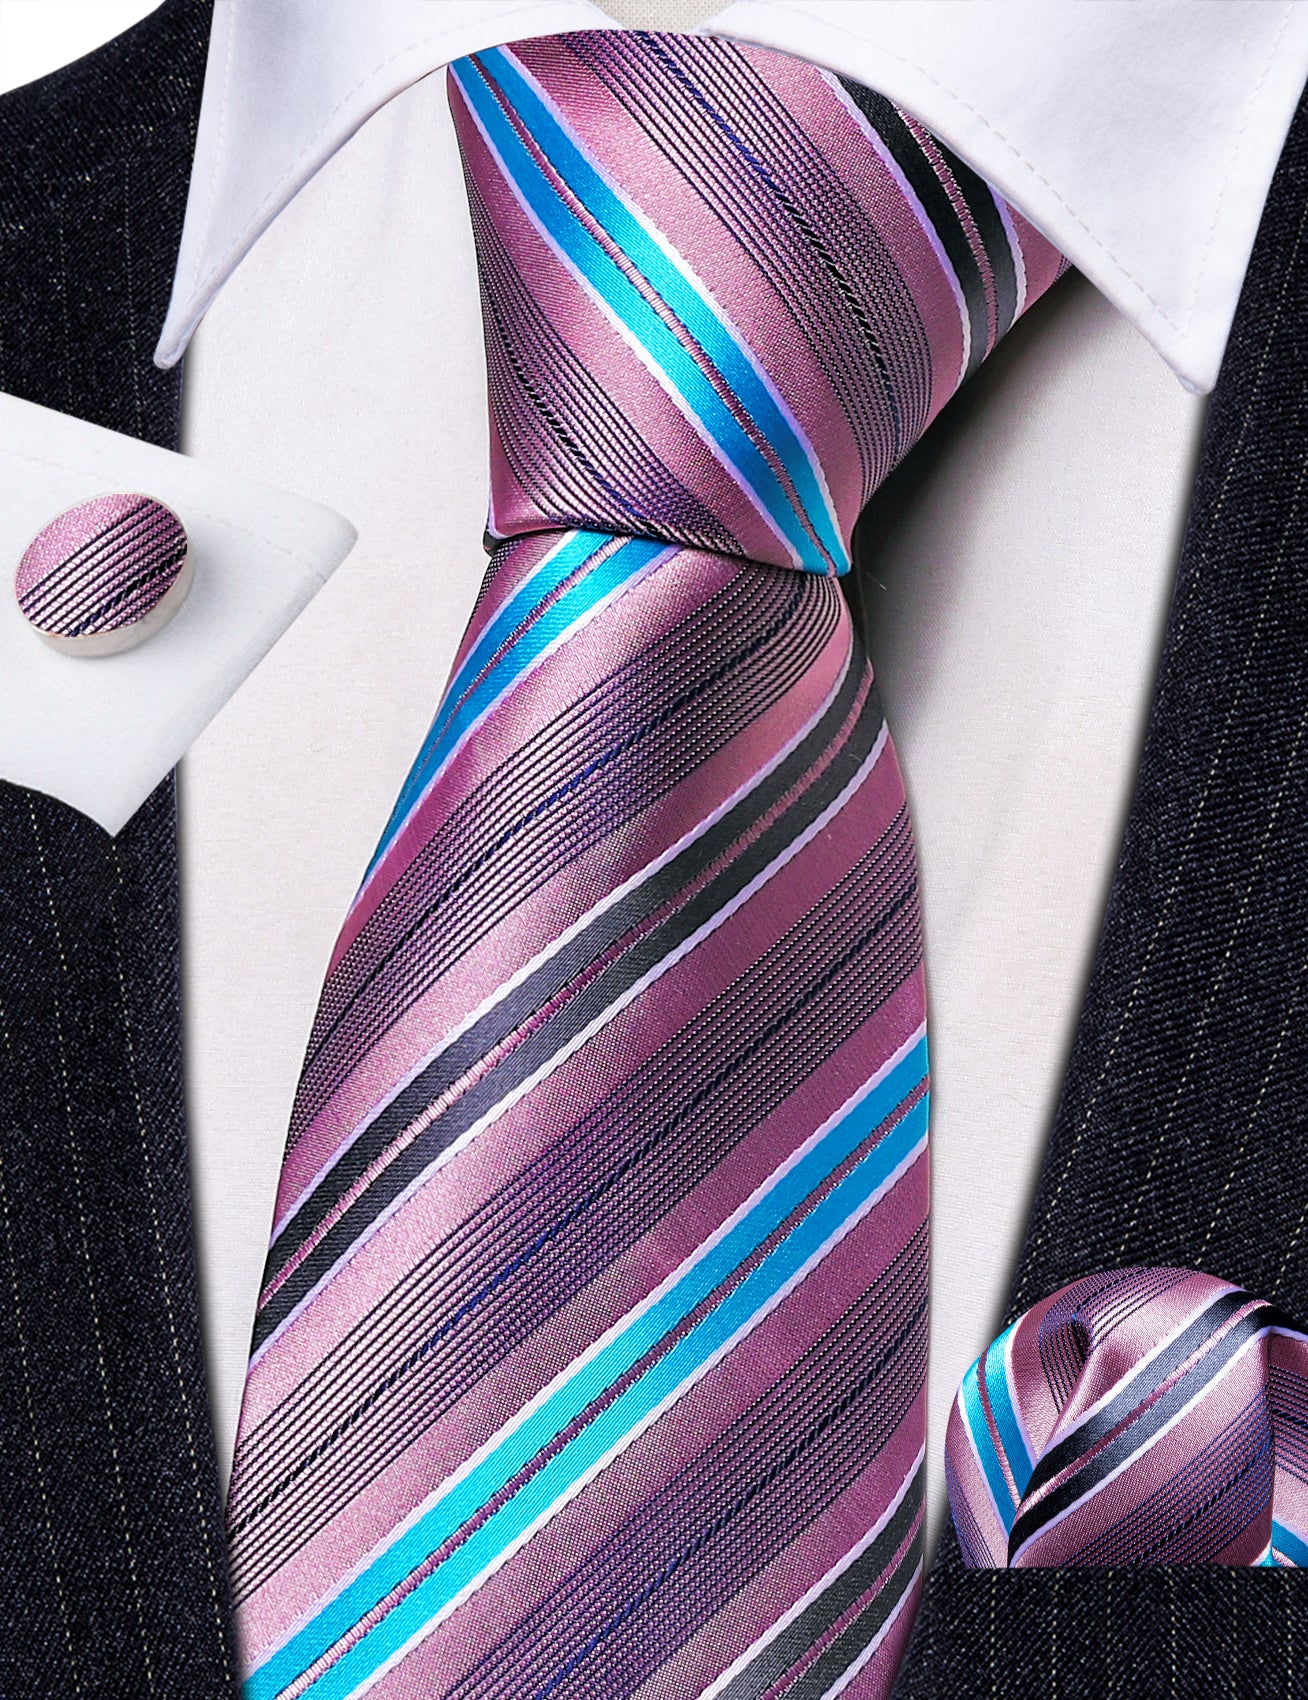 Black suit white shirt Dark grey teal blue stripes necktie set for men 